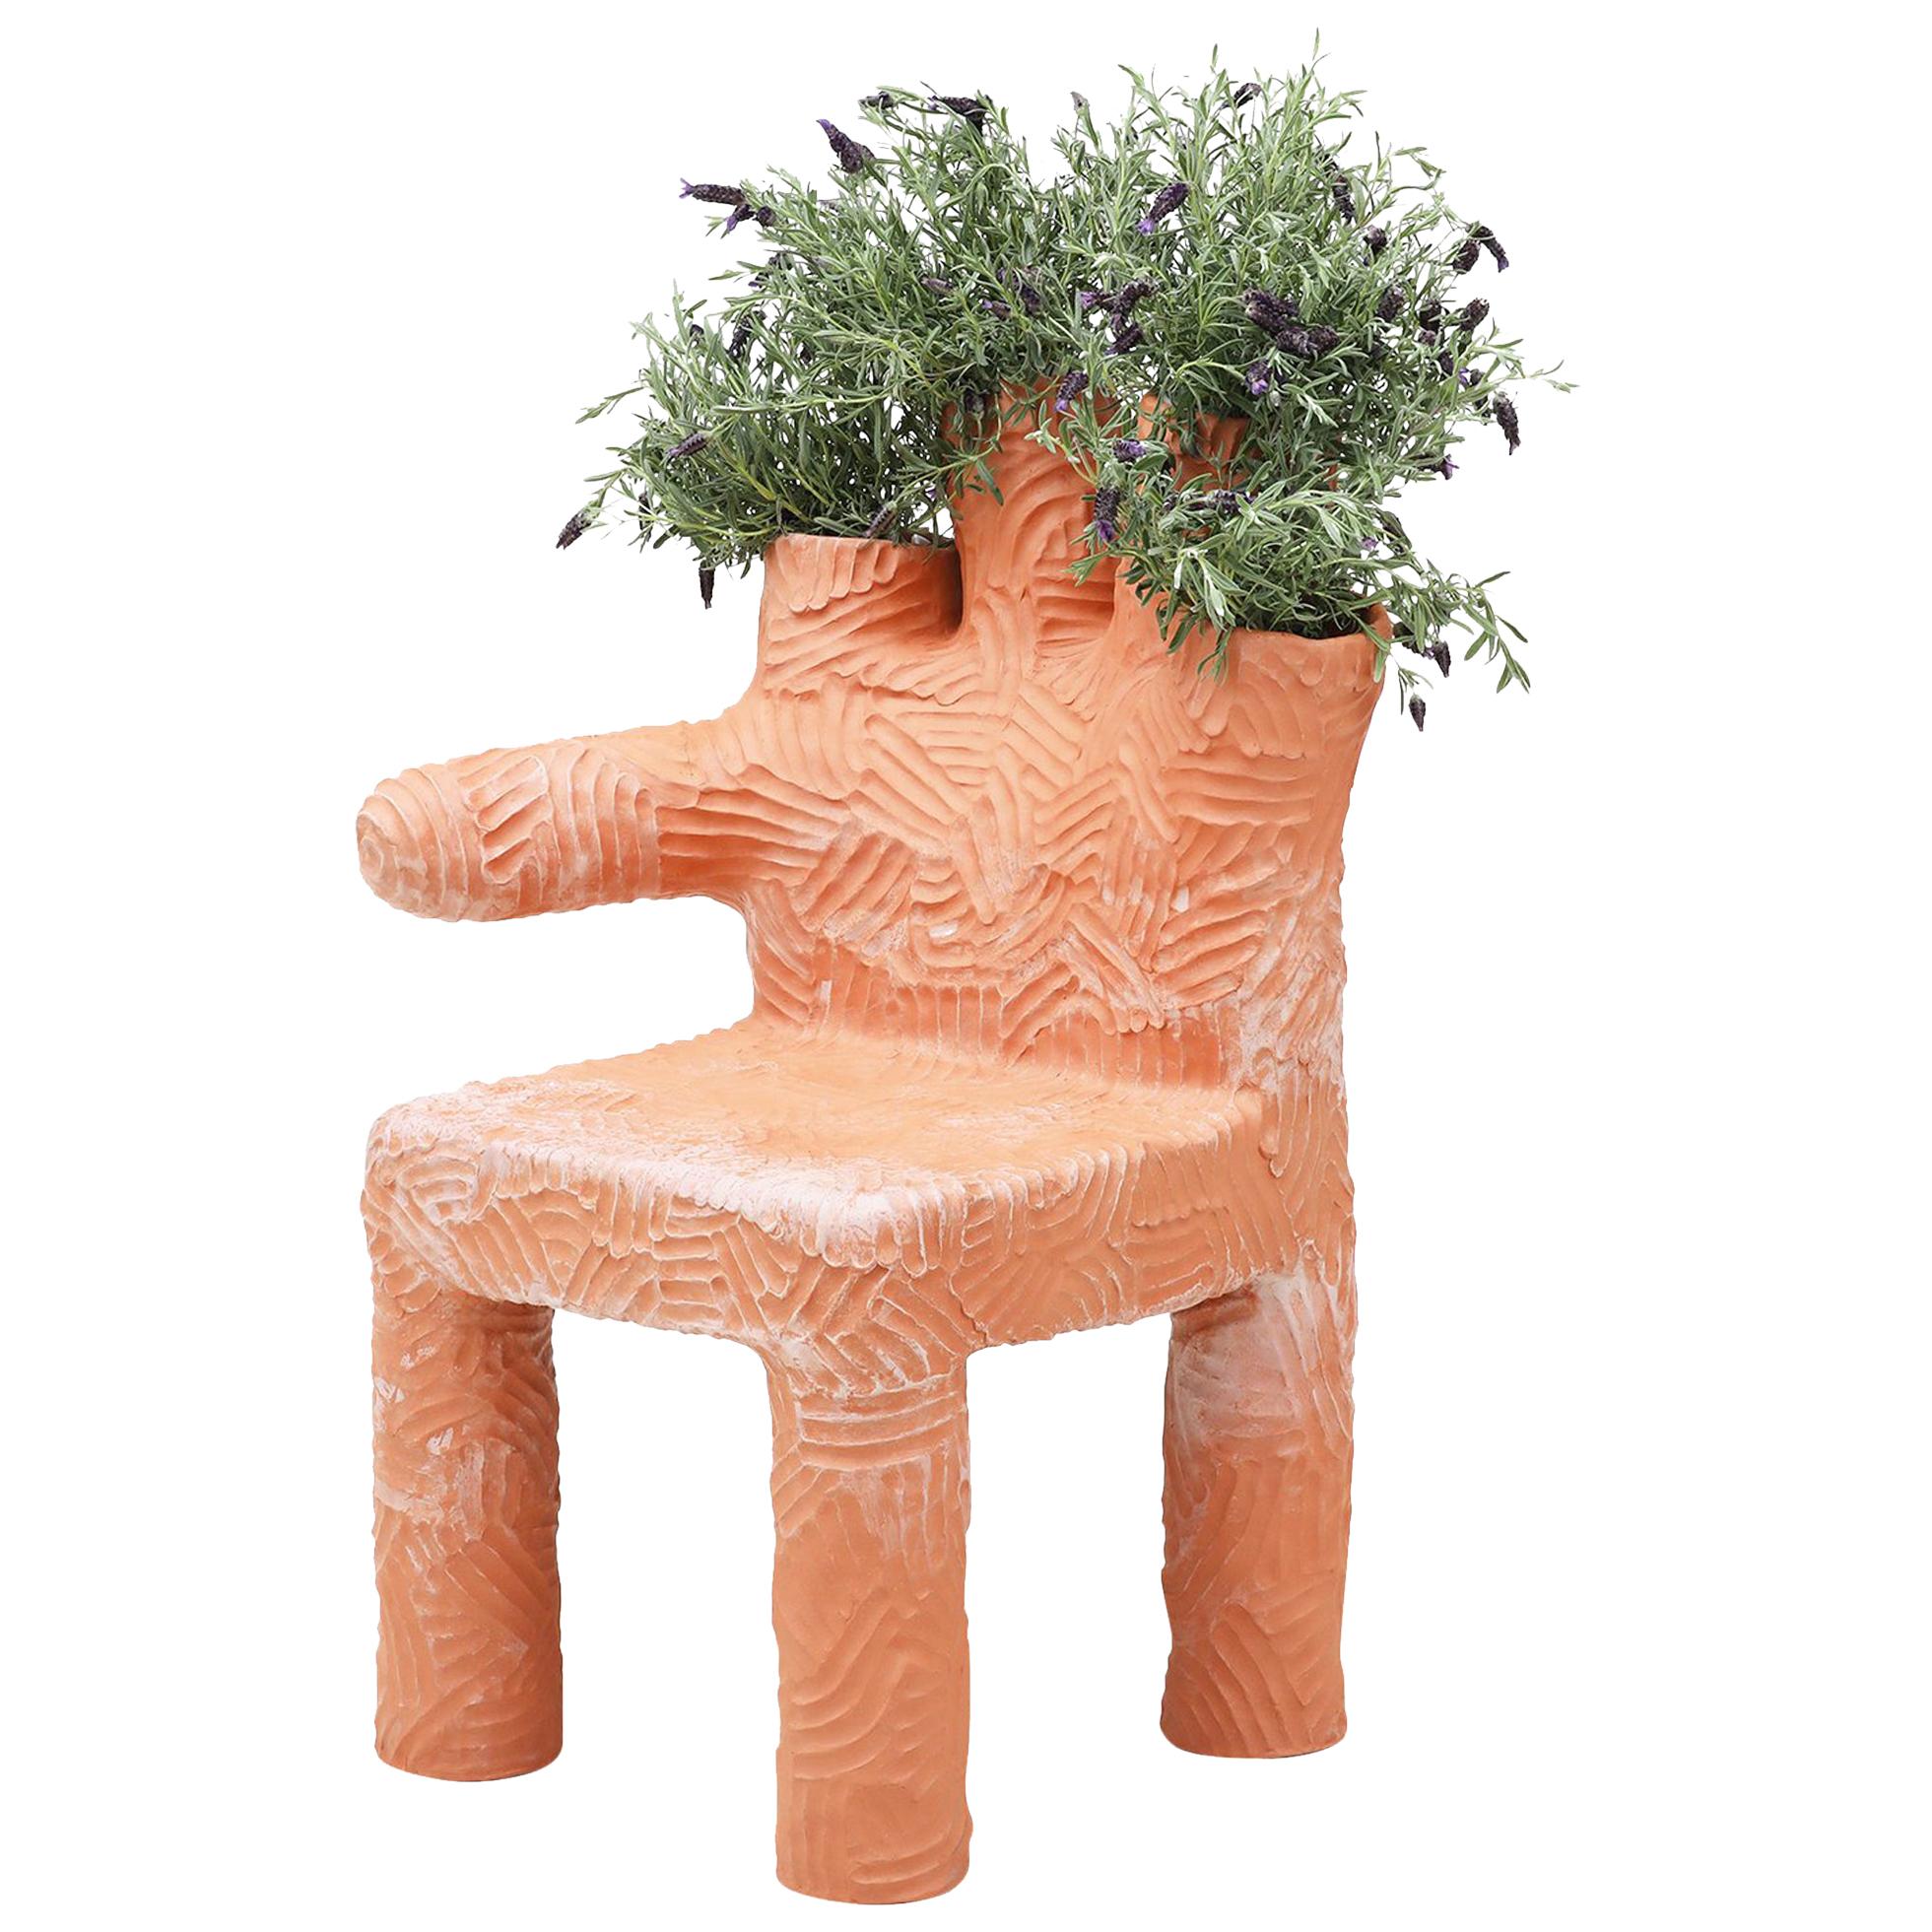 Chris Wolston Terracotta Plant Chair "Colibri"